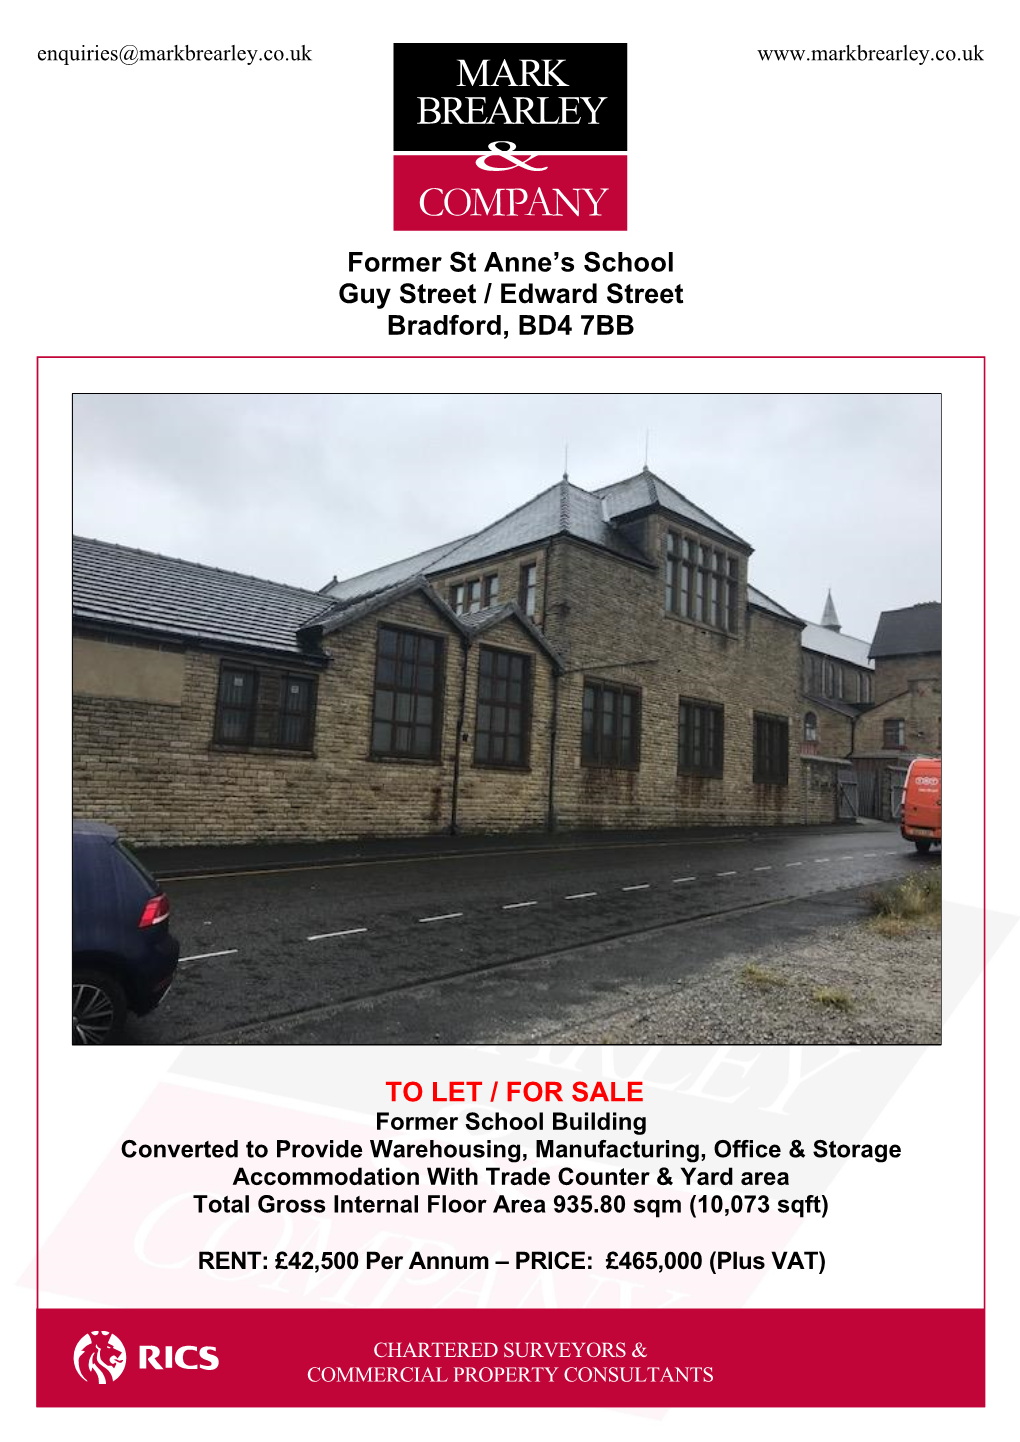 Former St Anne's School Guy Street / Edward Street Bradford, BD4 7BB